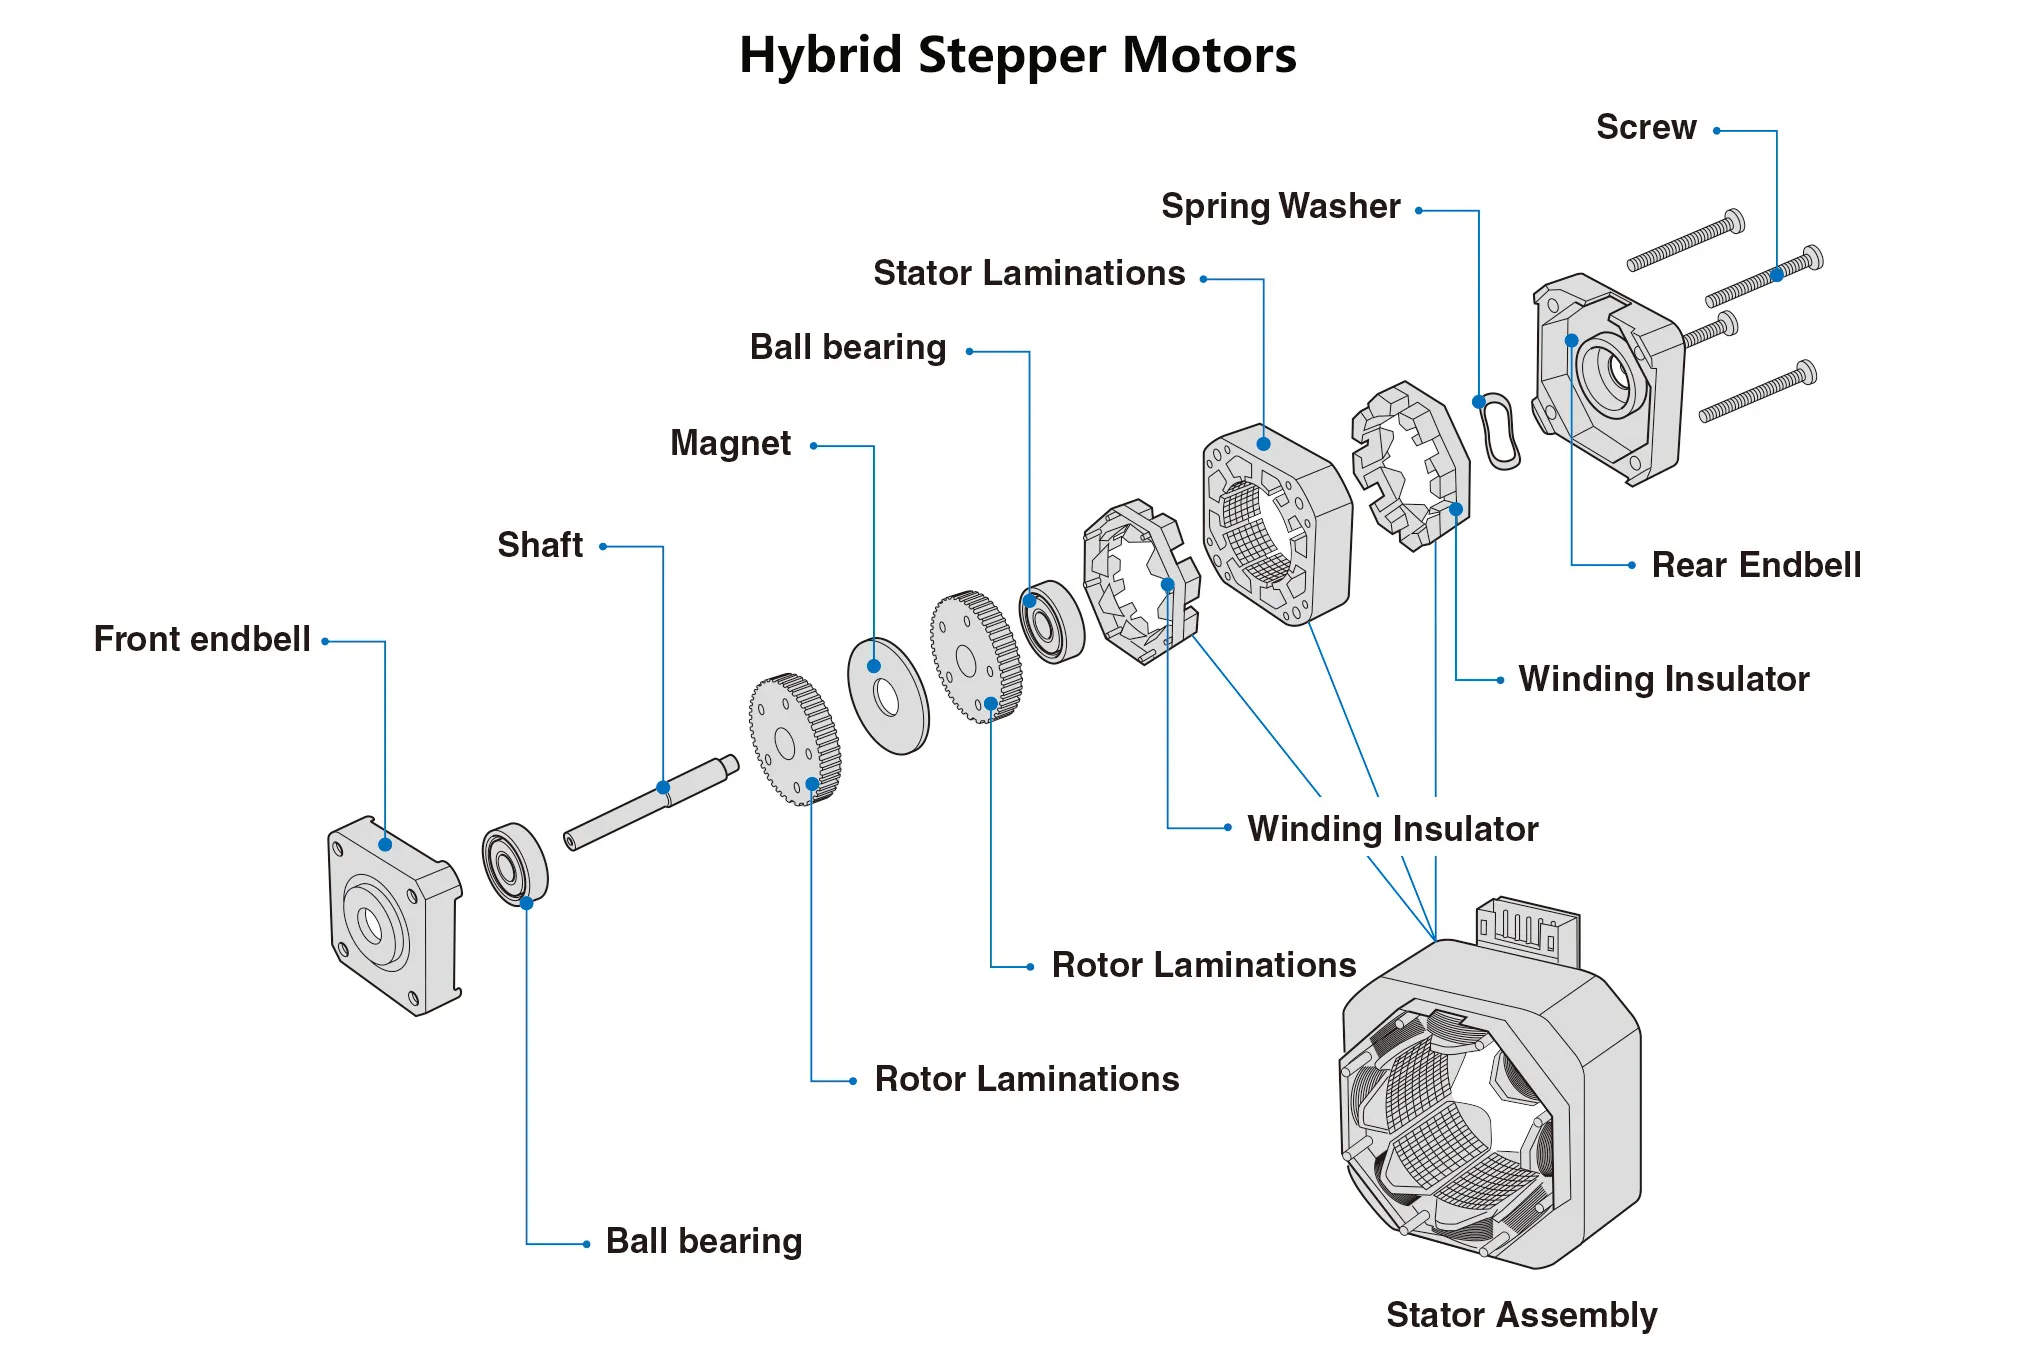 Hybrid Stepper Motors Structure